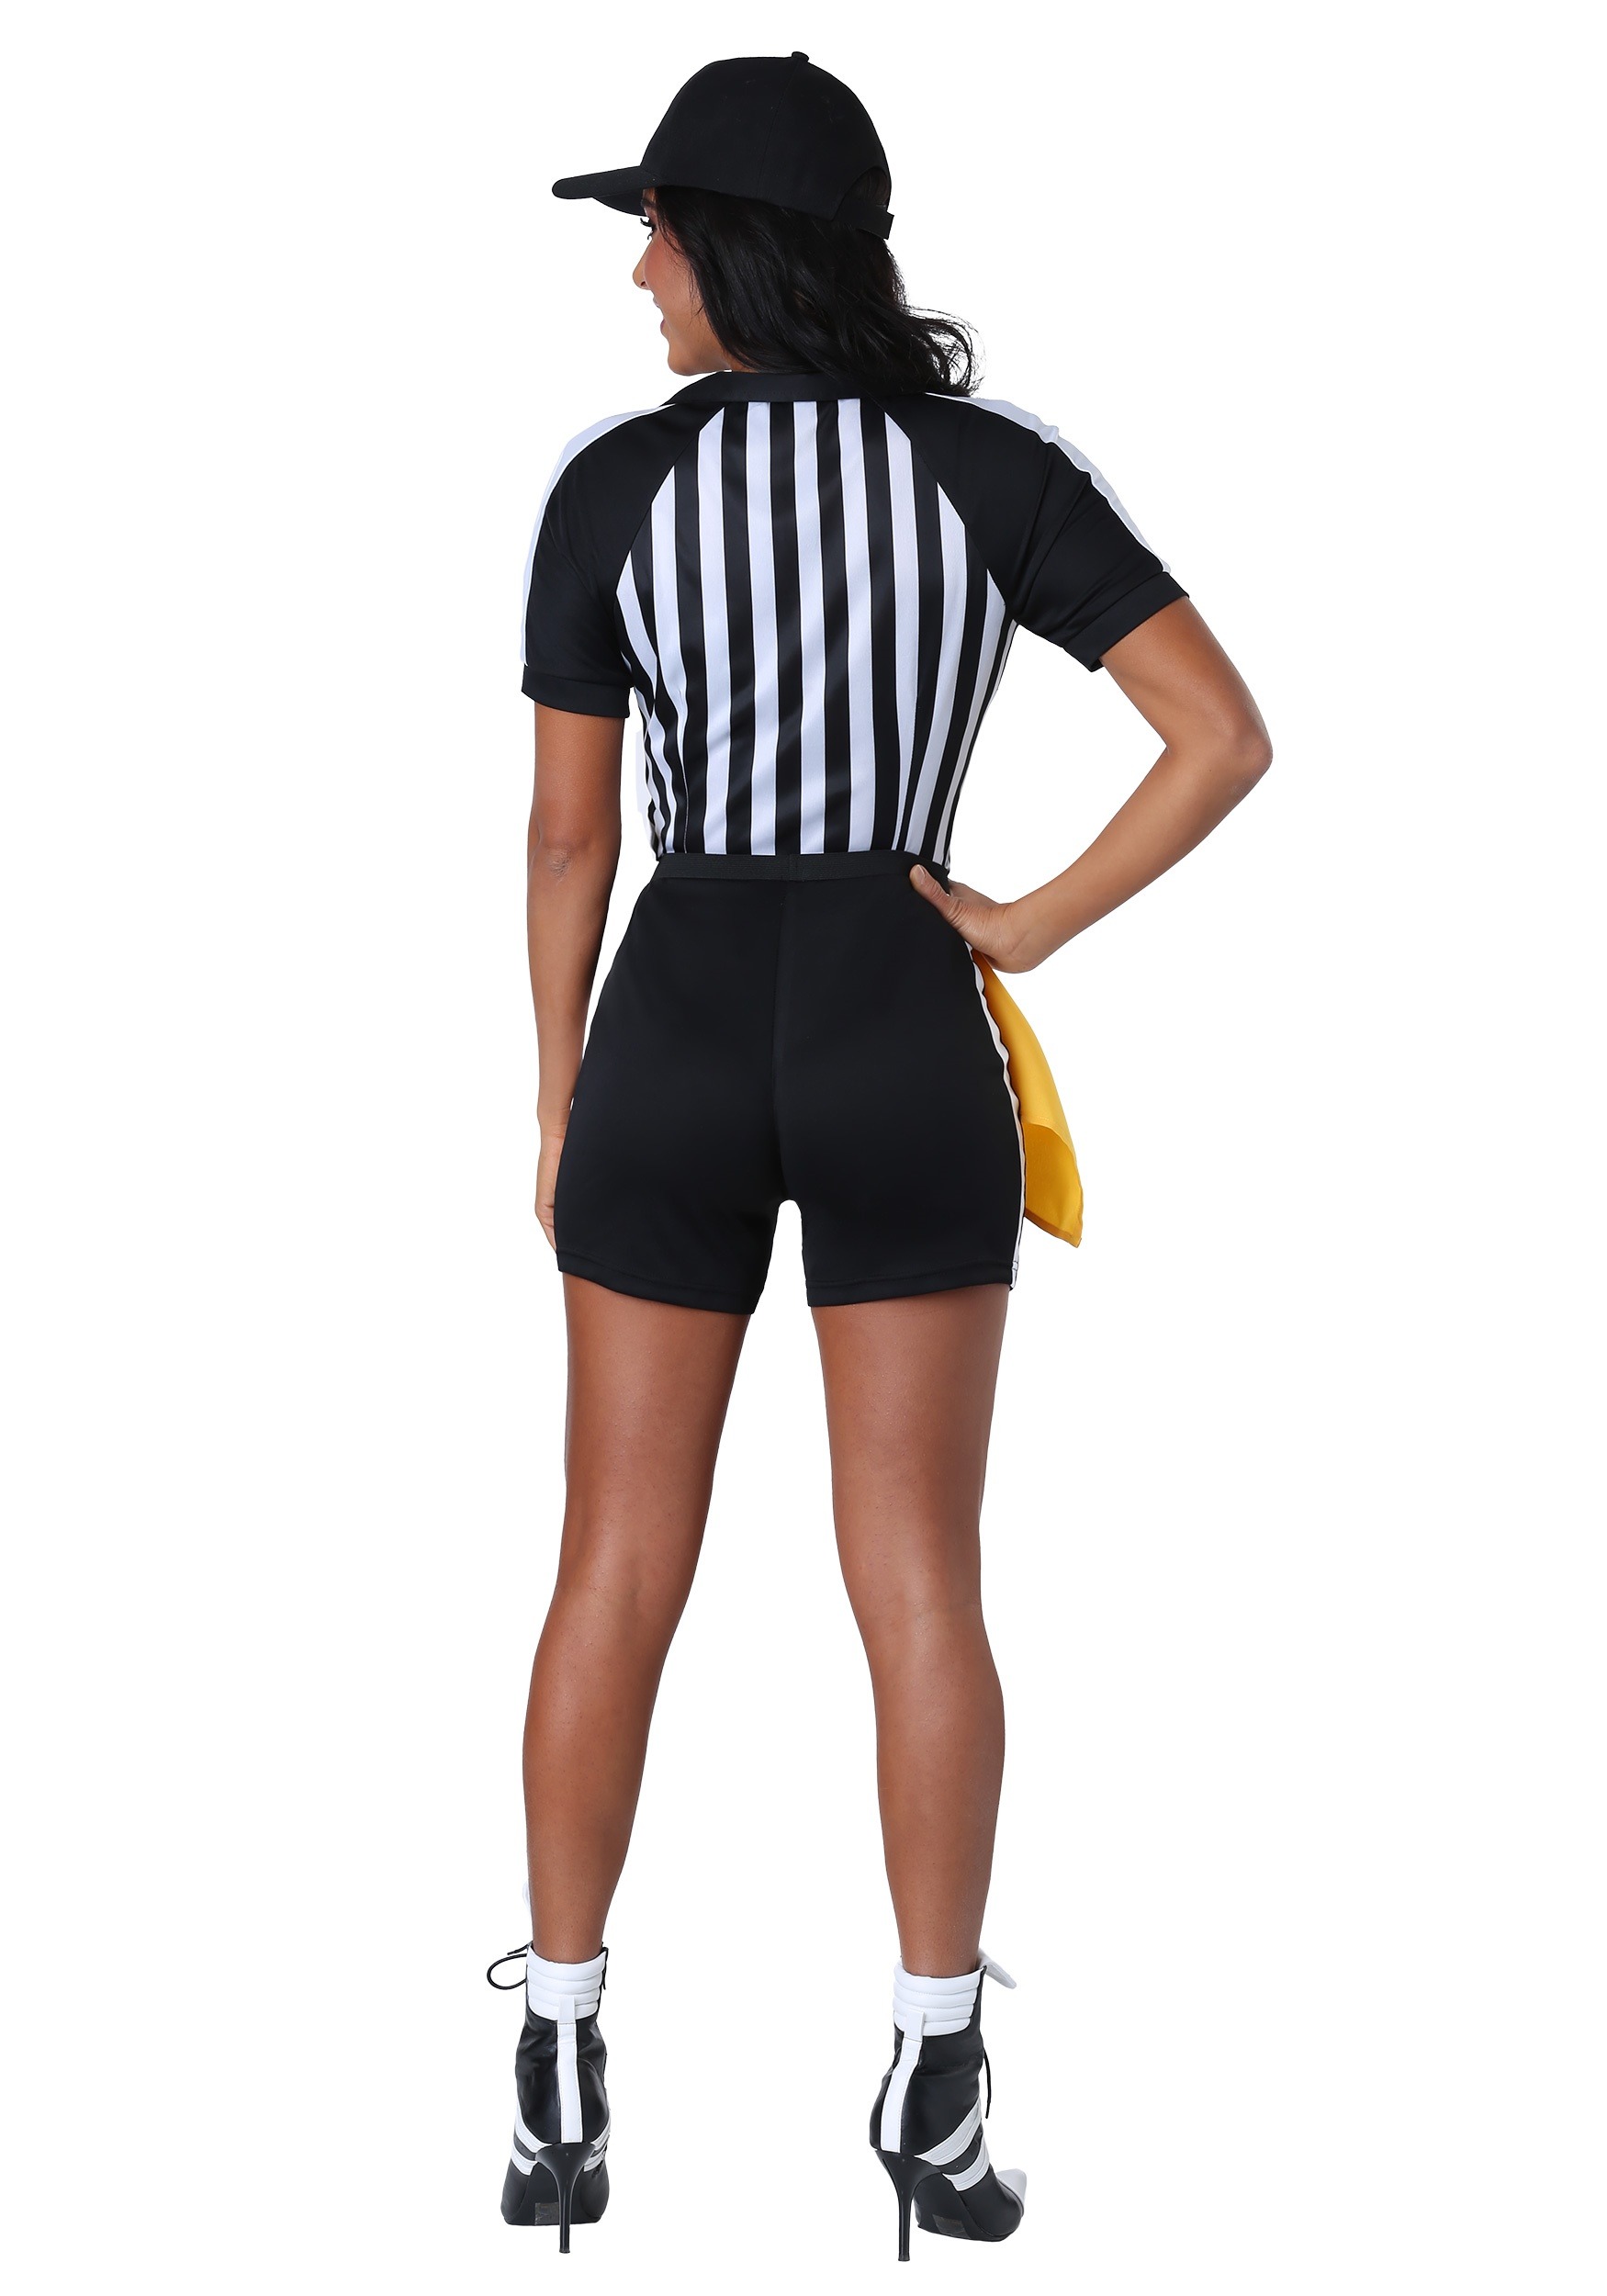 Racy Referee Women's Costume - image 2 of 2